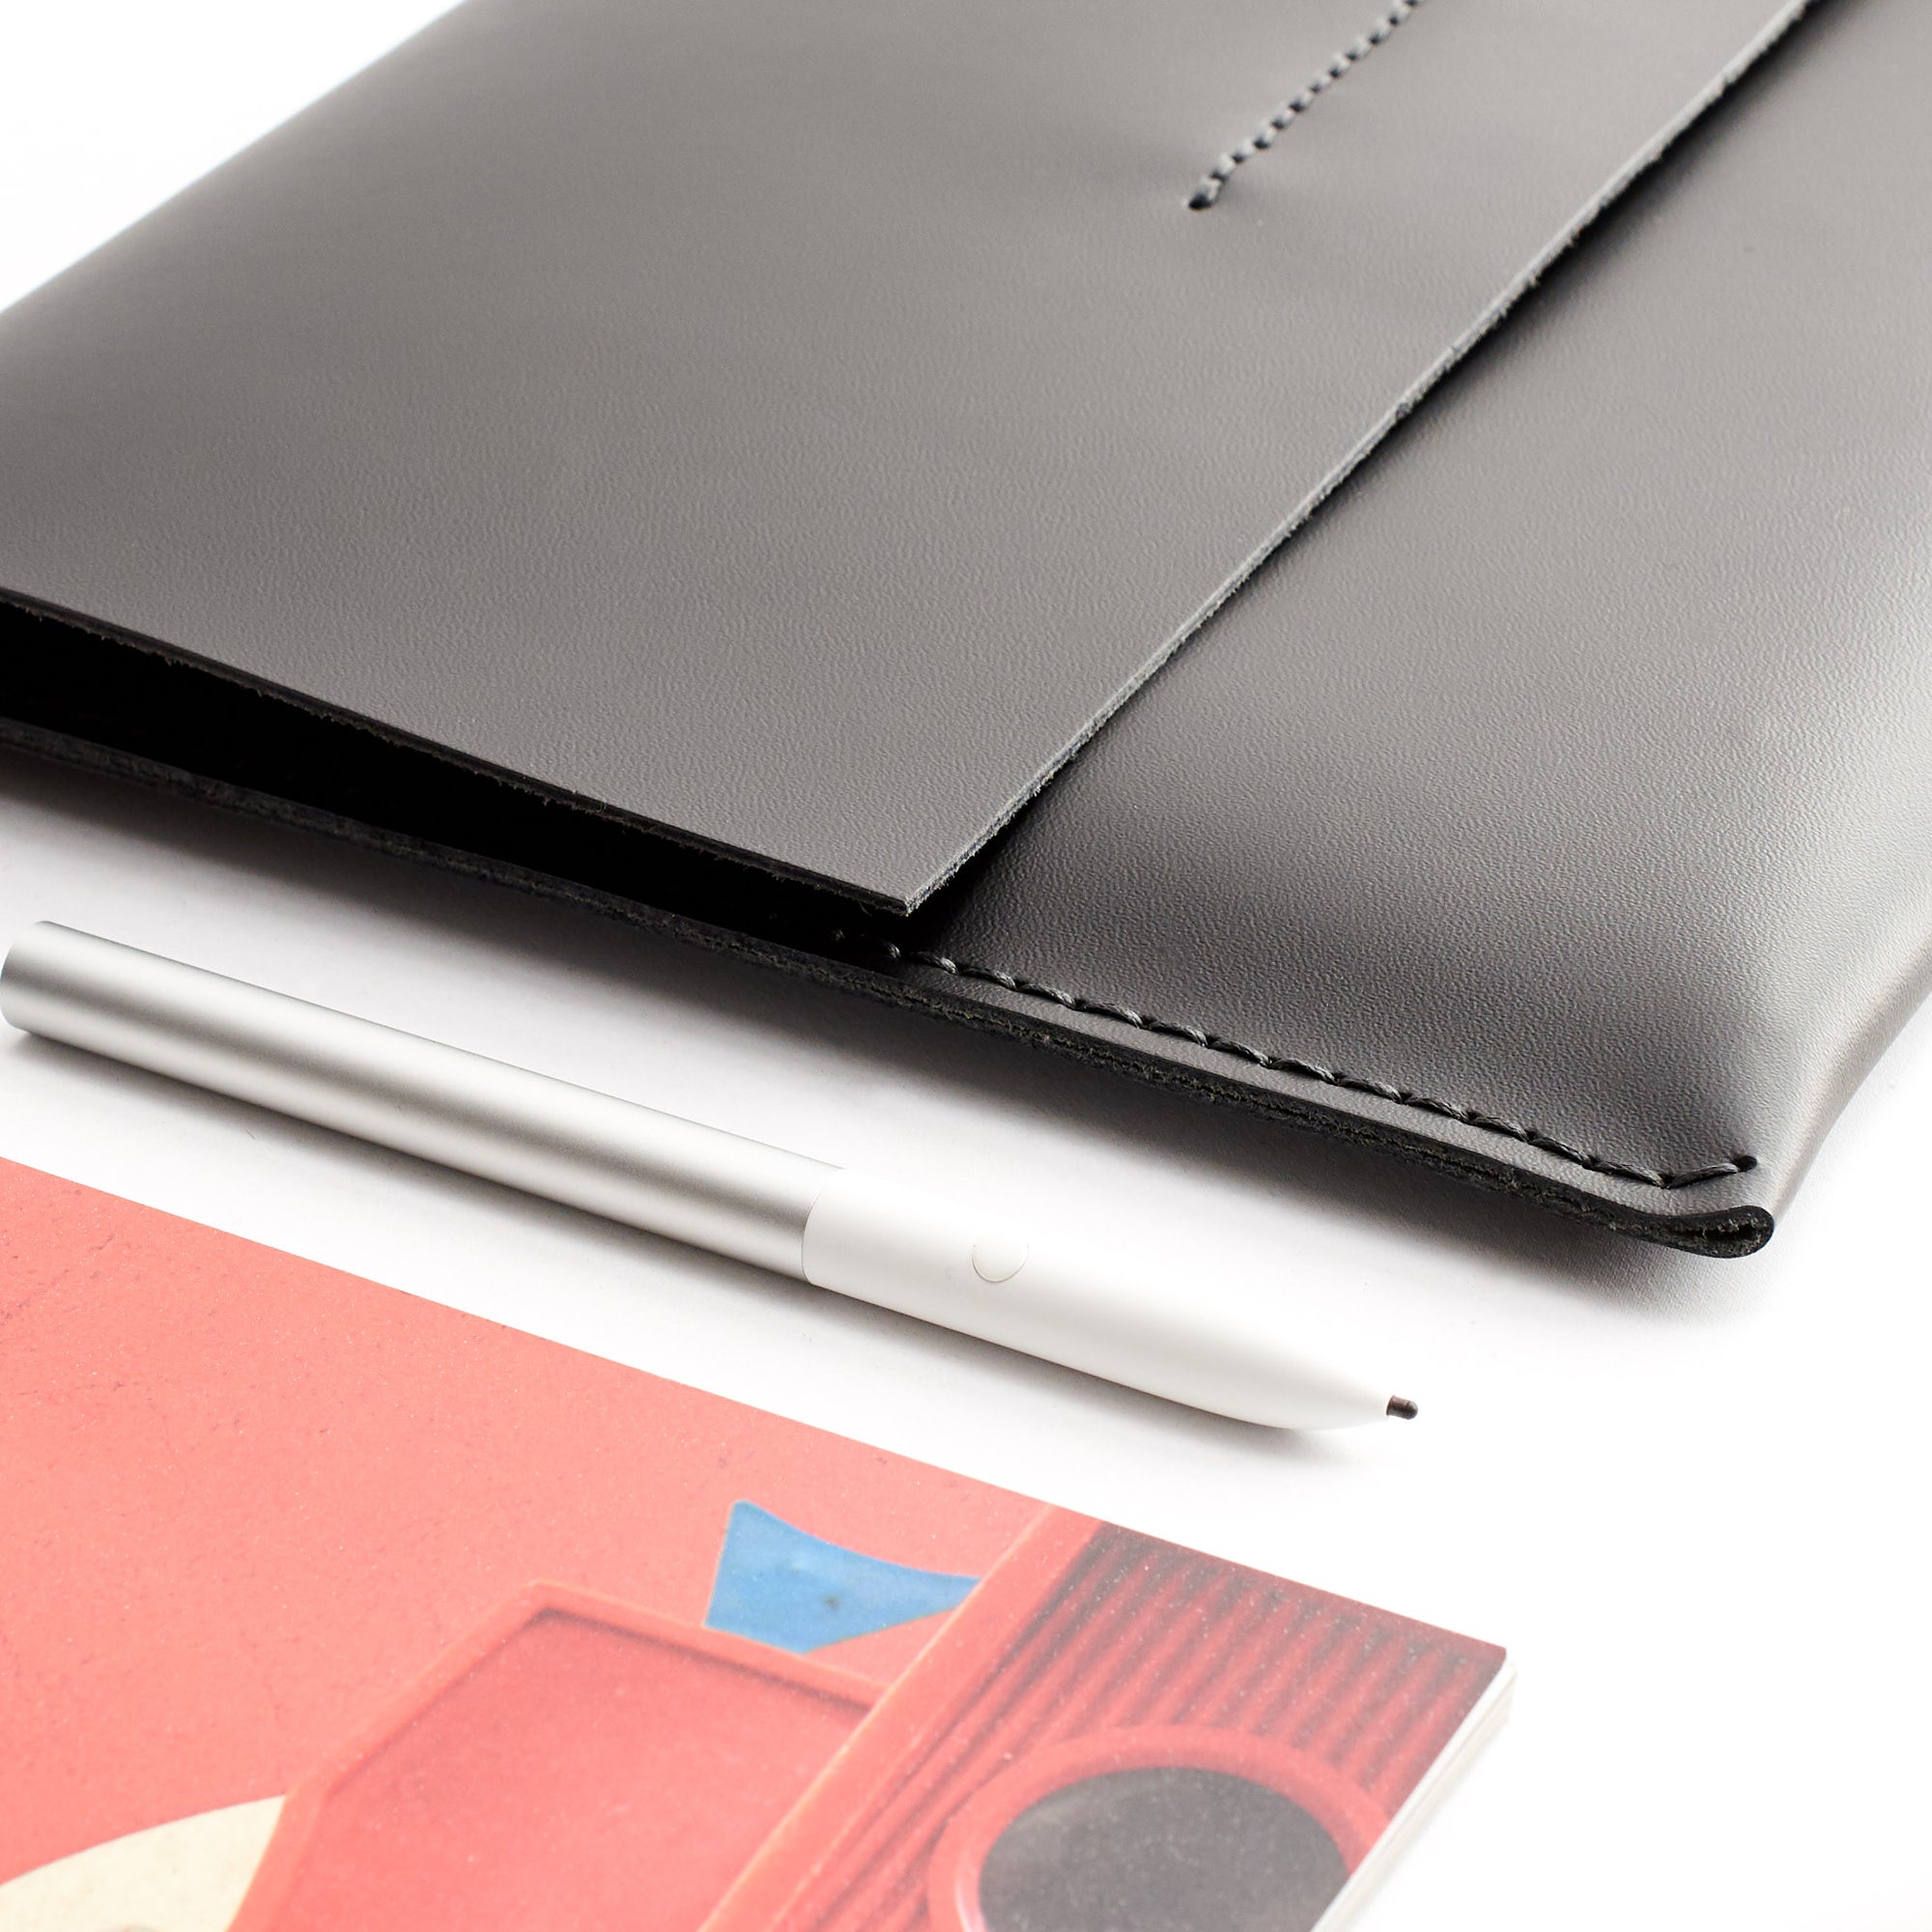 Style. black leather. Google Pixelbook Black leather case with pen holder. Pixelbook laptop mens folio